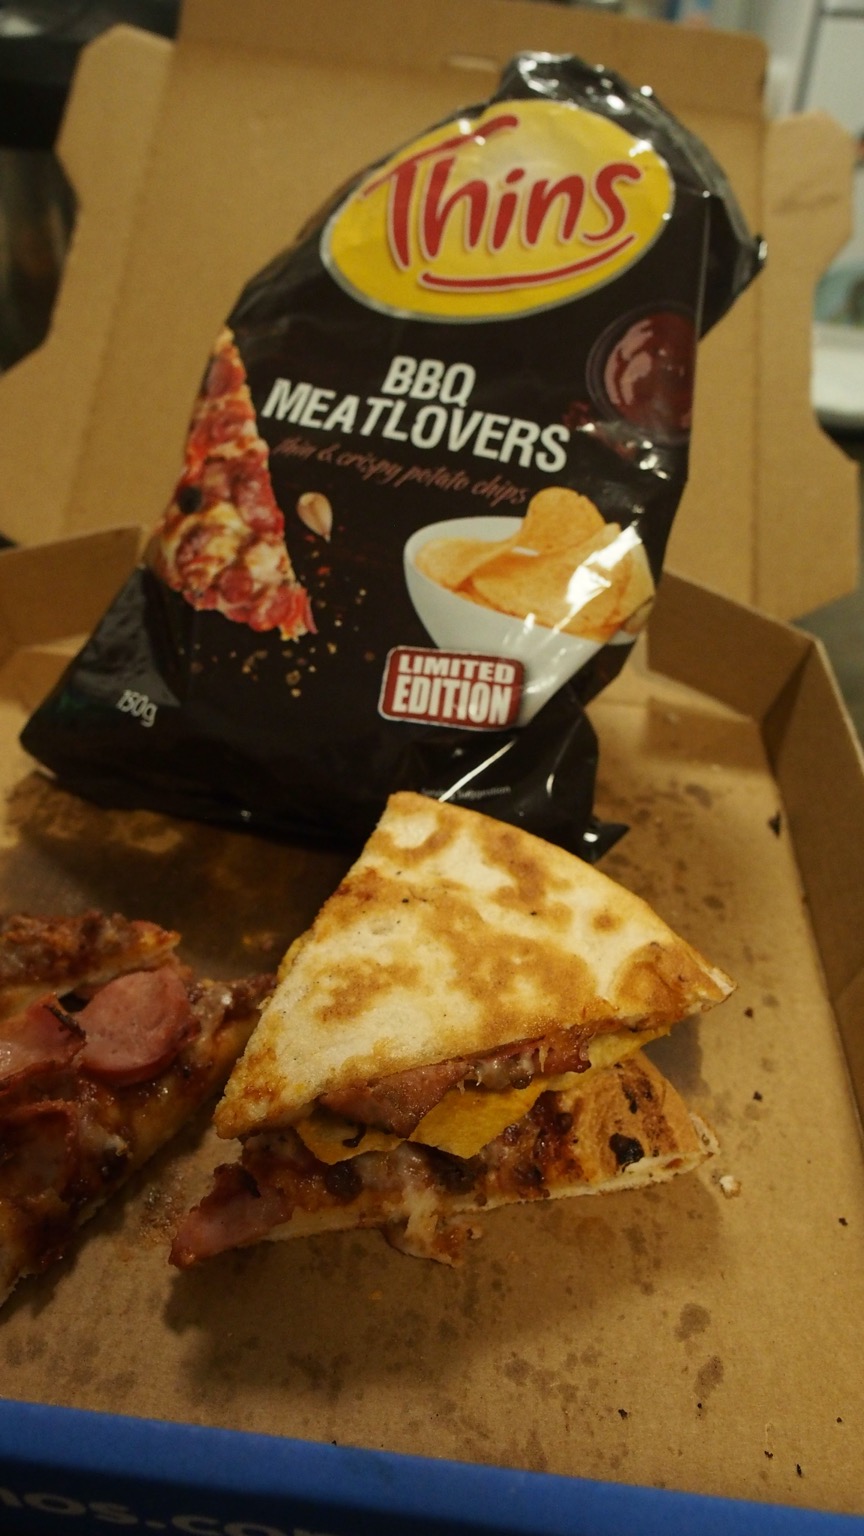 Pizza crisp sandwich alongside bag and more pizza